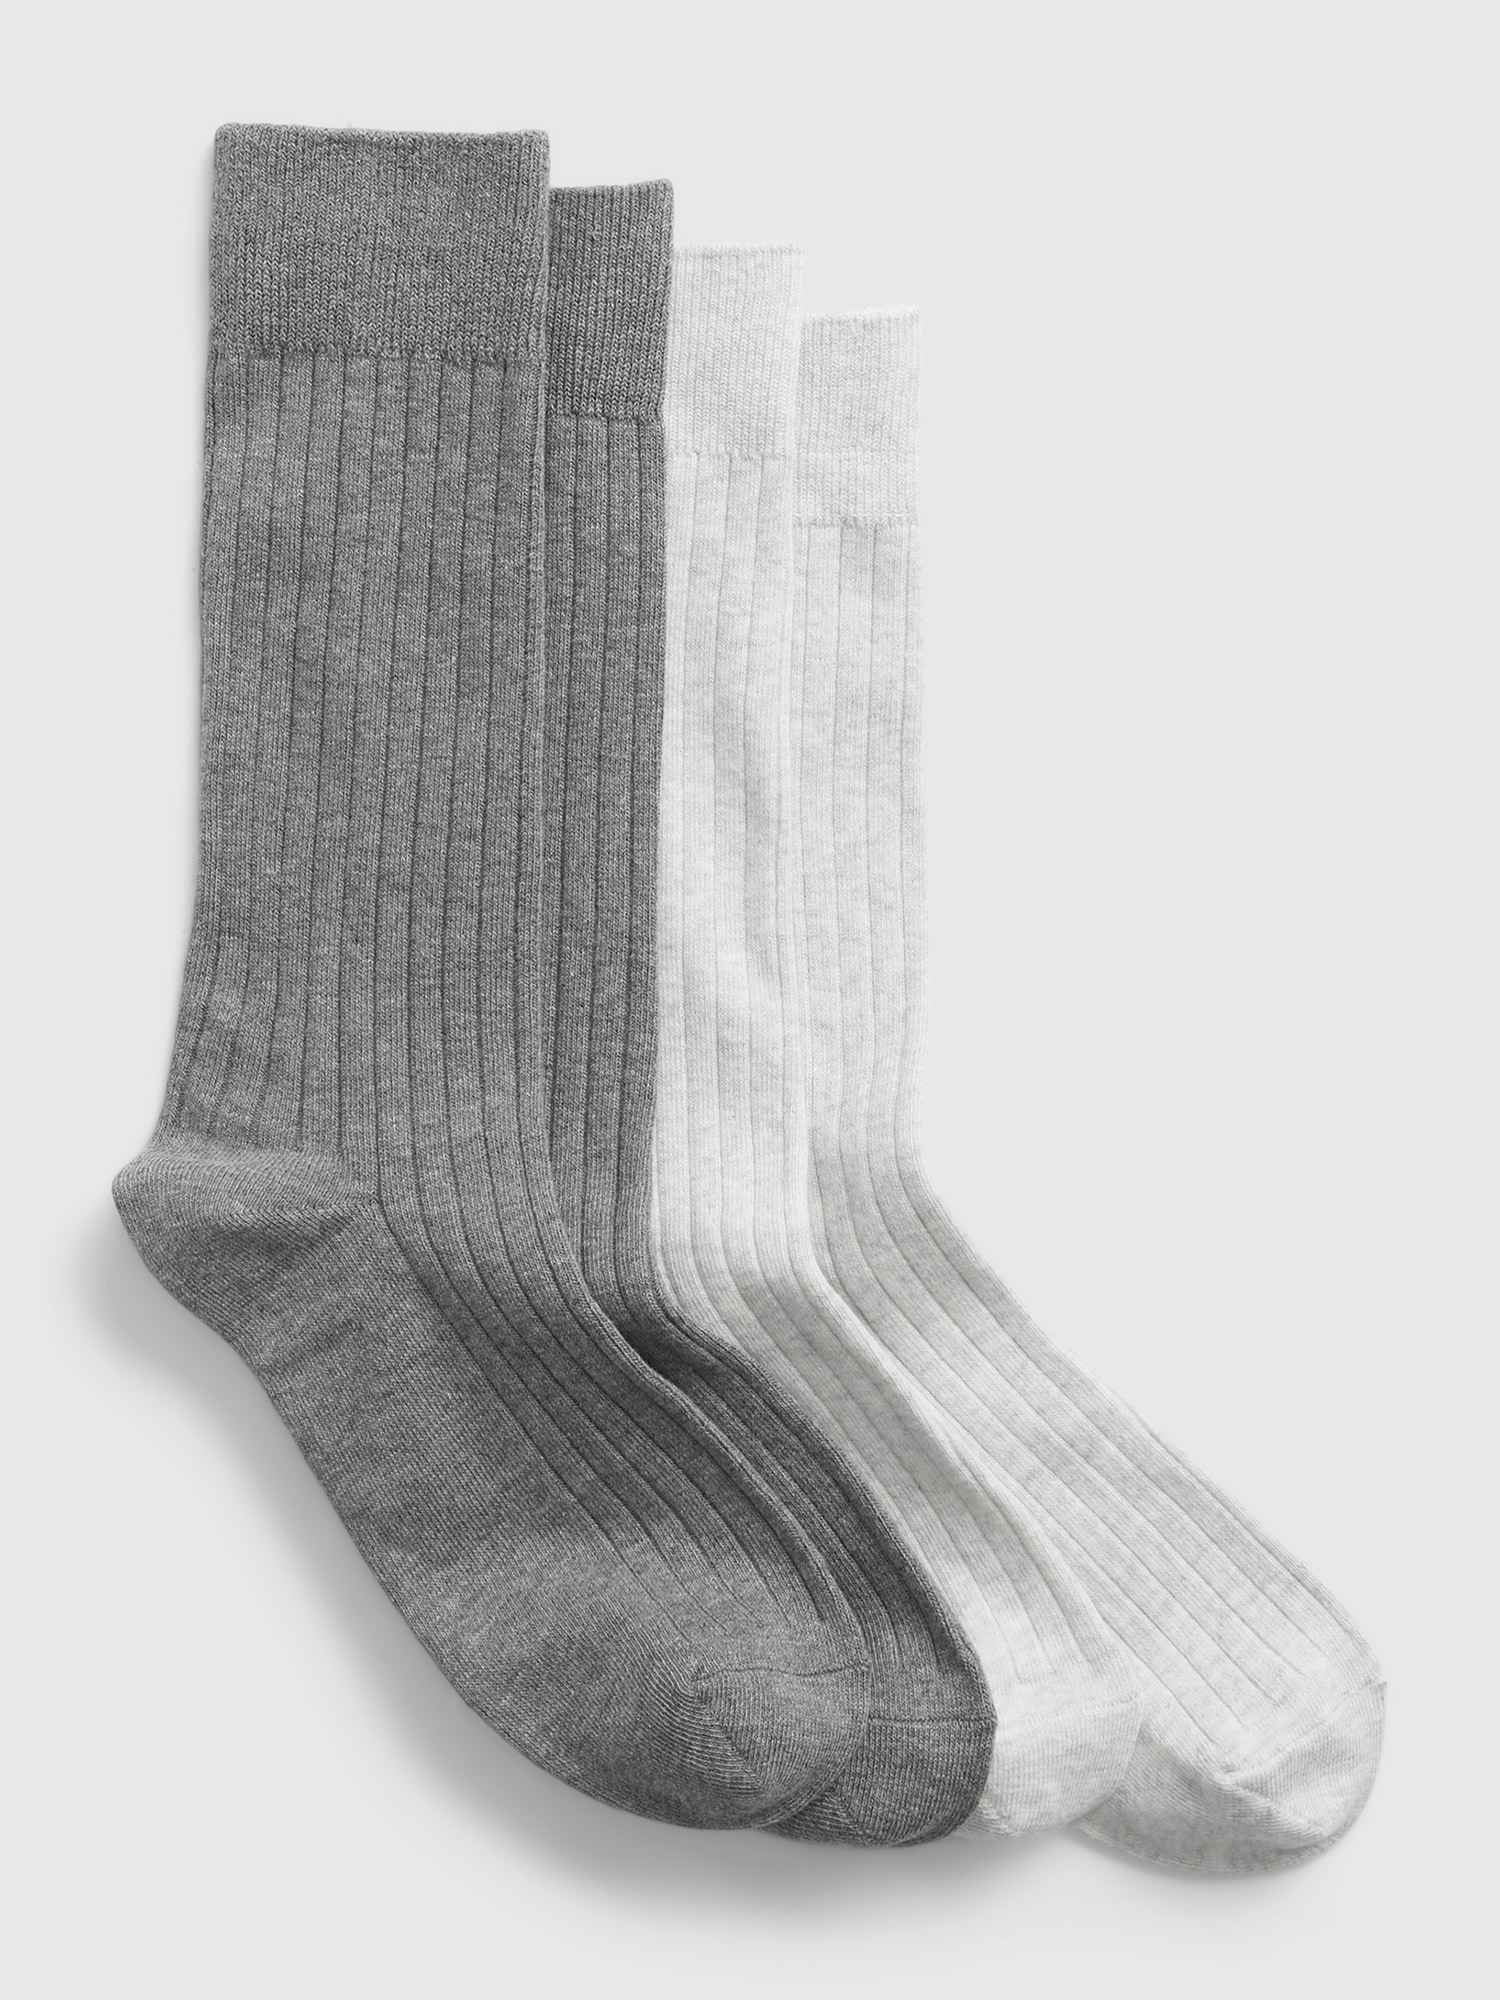 Gap Cotton Dress Socks (2-Pack)